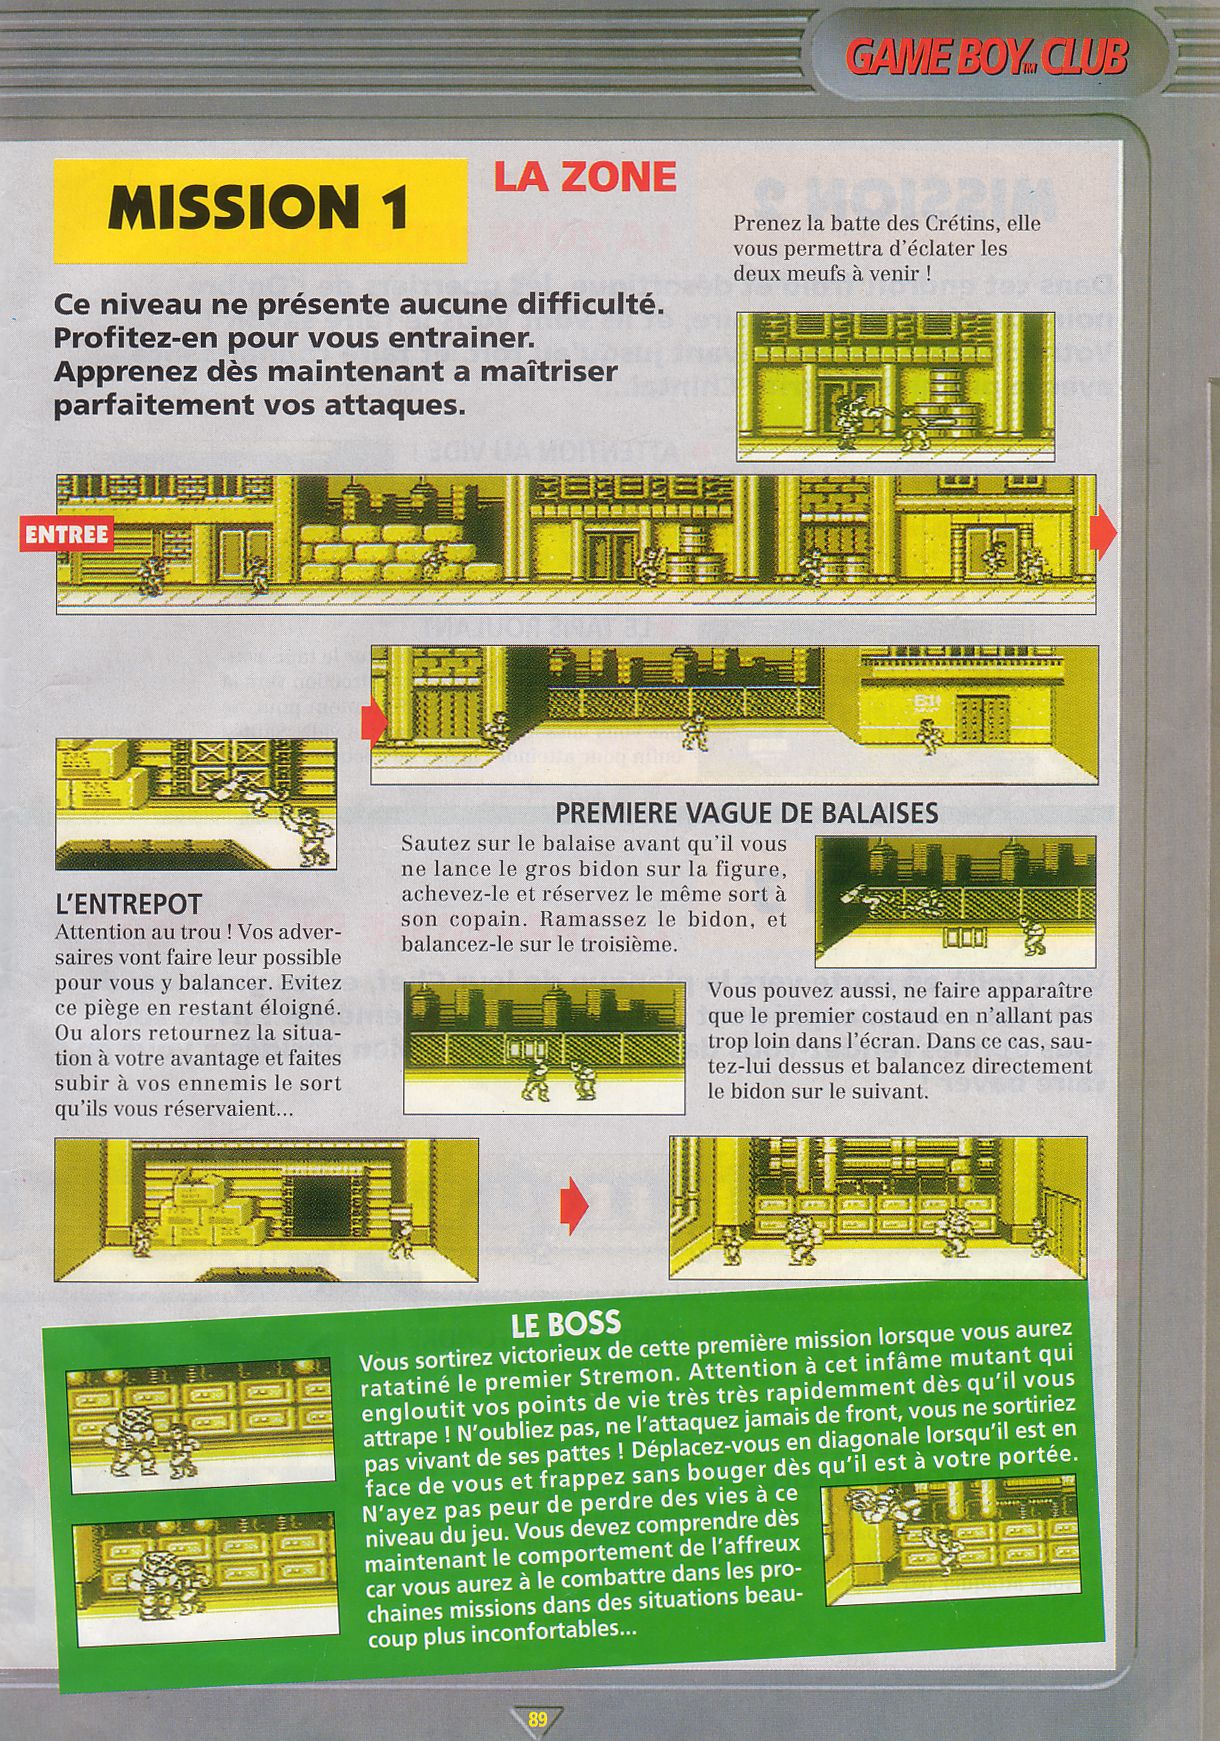 tests//695/Nintendo Player 005 - Page 089 (1992-07-08).jpg